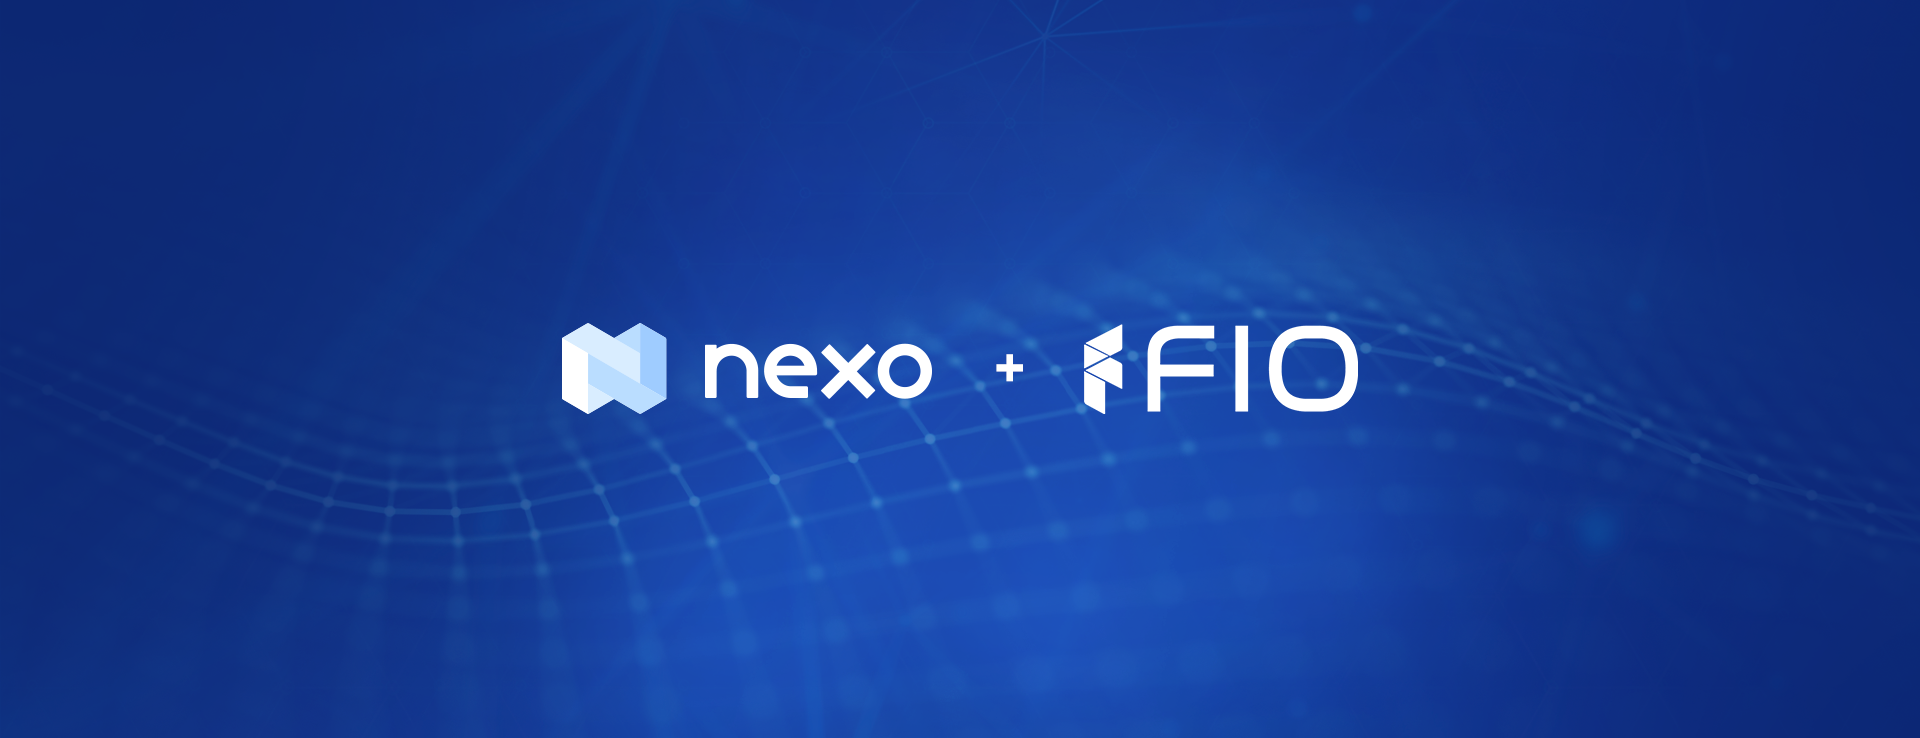 Nexo Partners with FIO to Improve Blockchain Usability